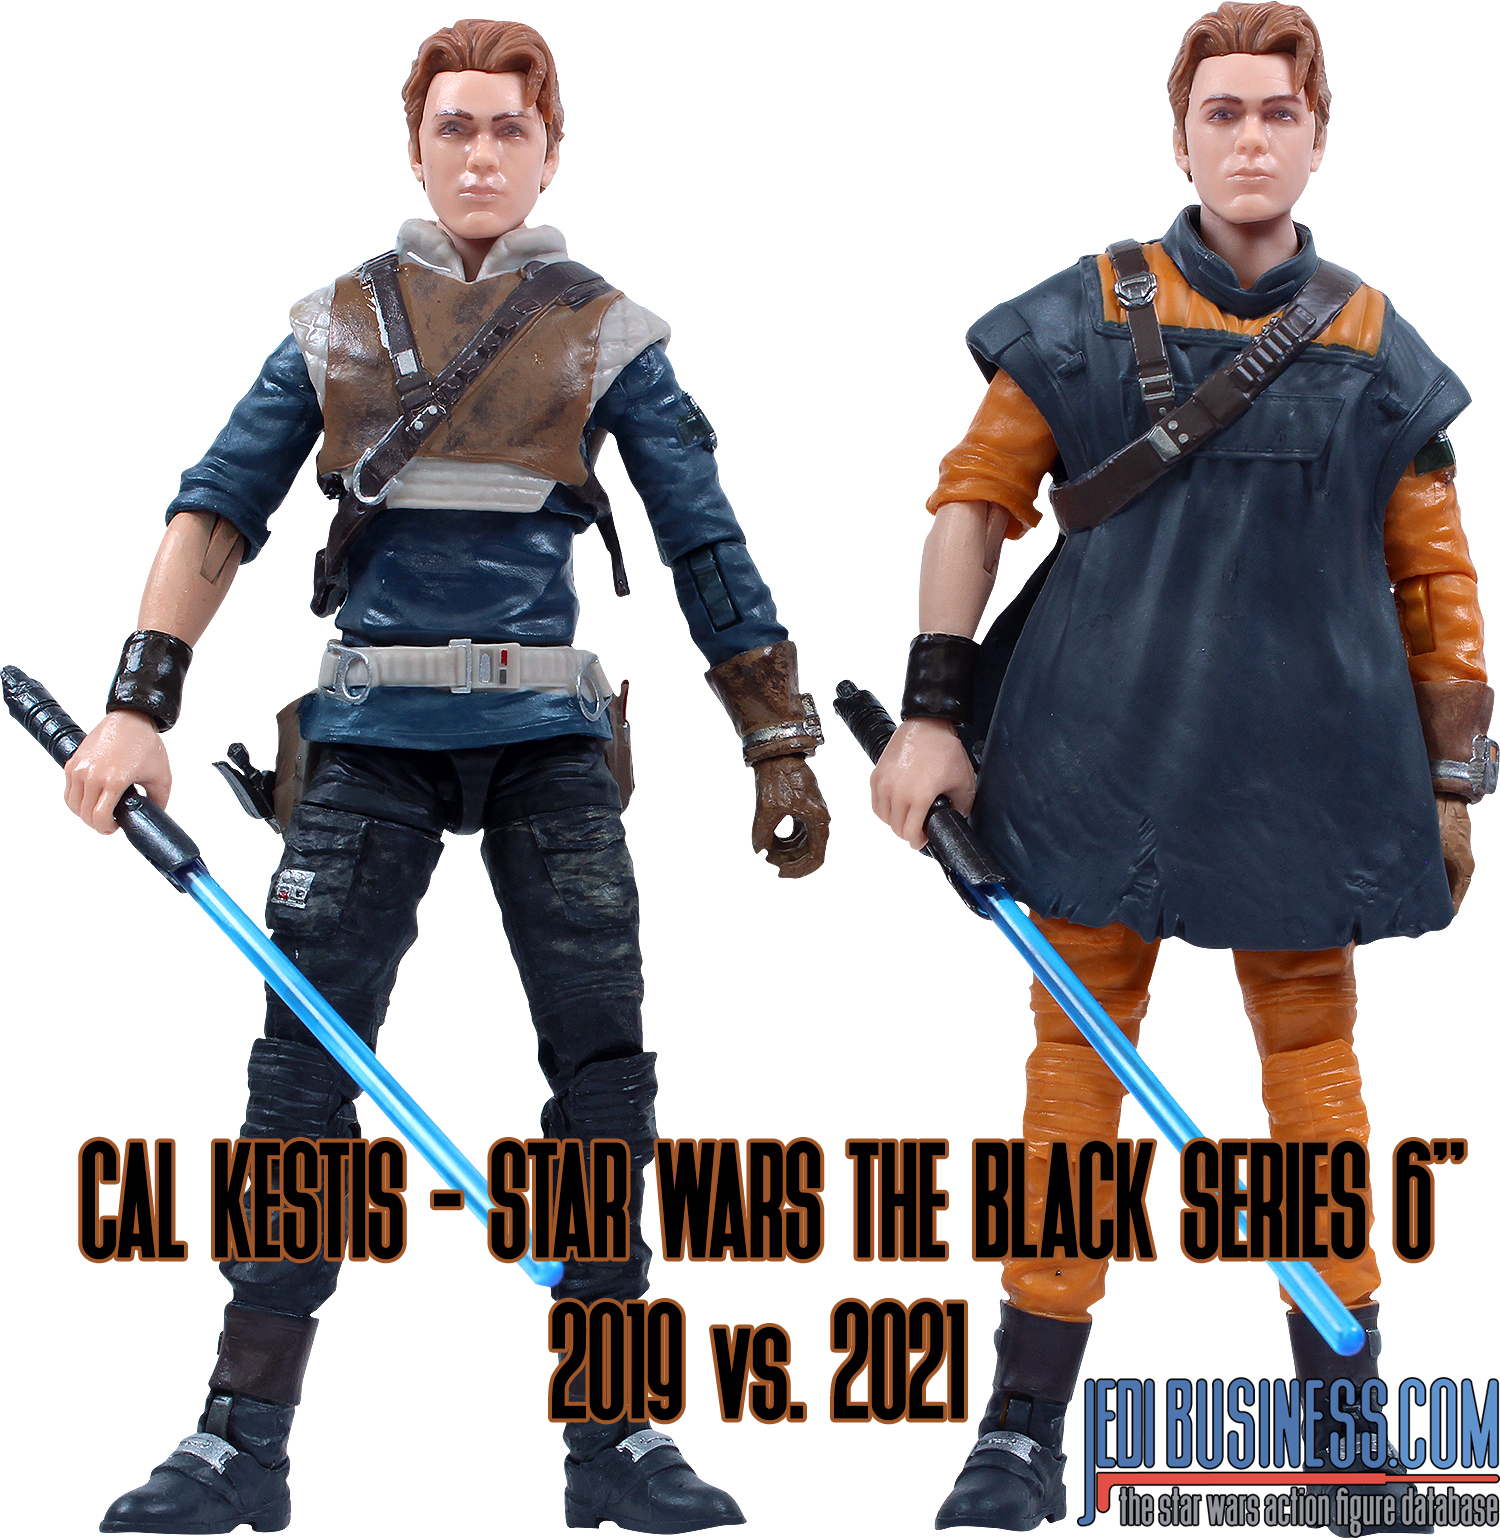 Cal Kestis Jedi: Fallen Order